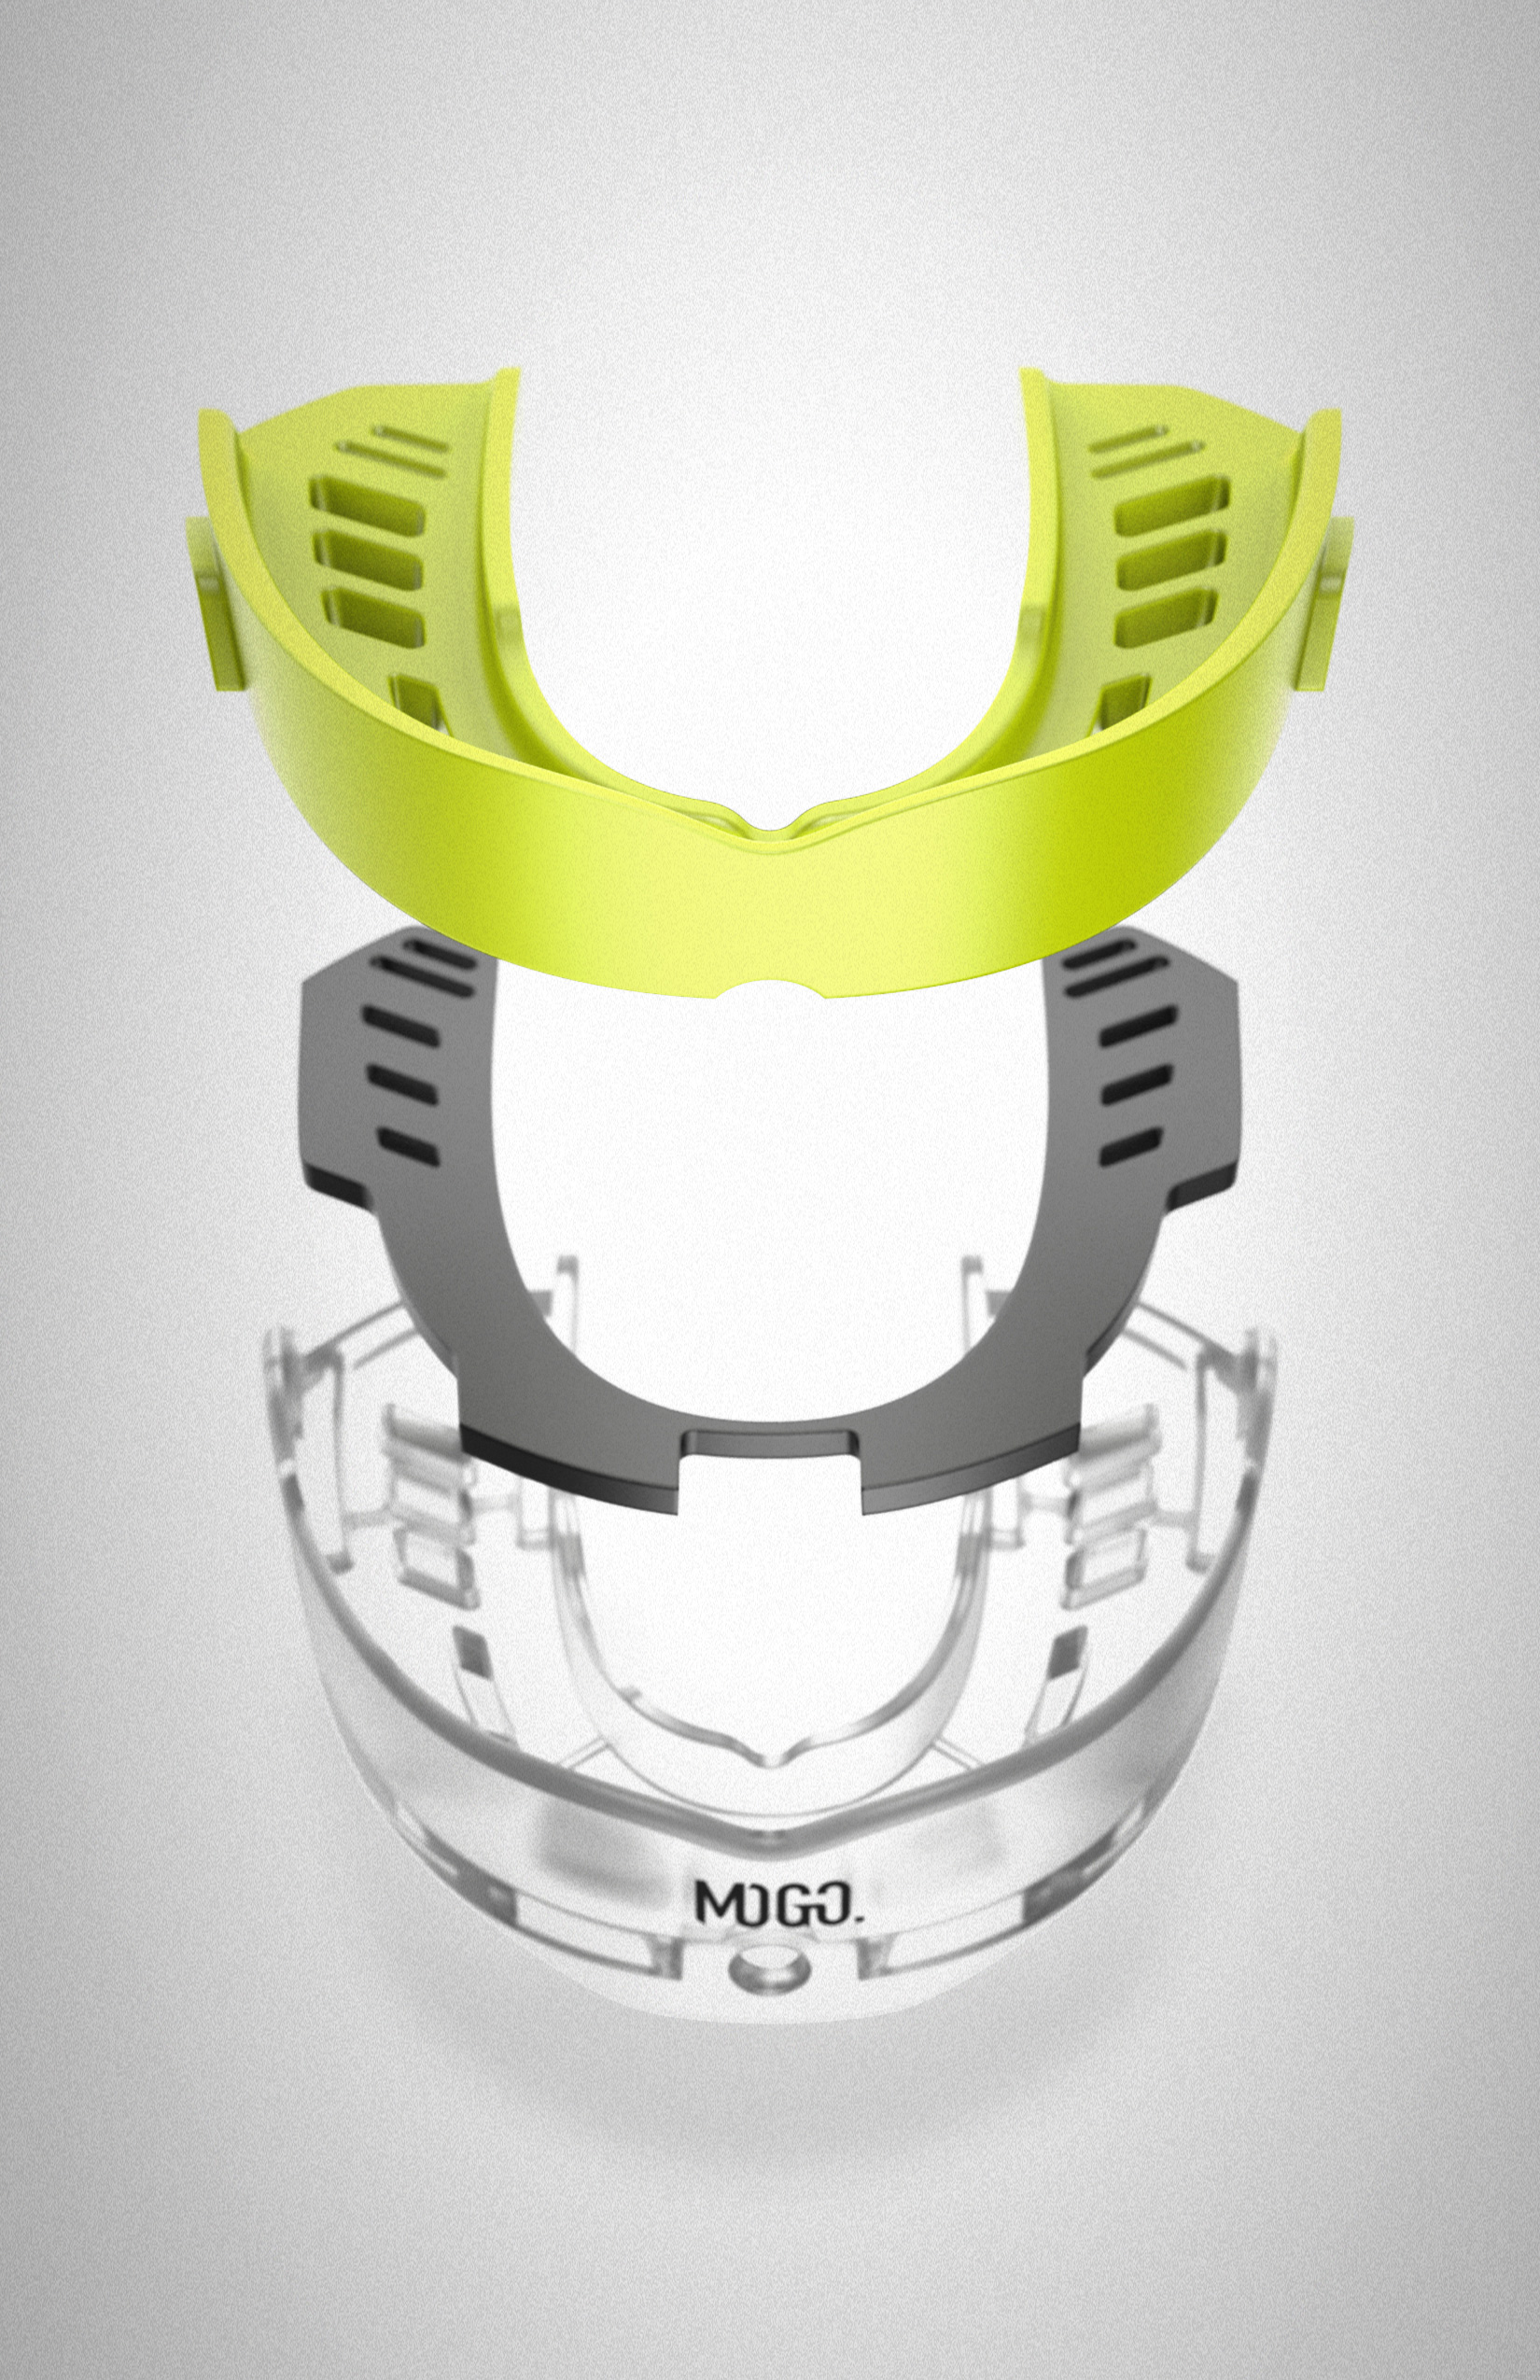 mogo mouth guard m3 product design 01